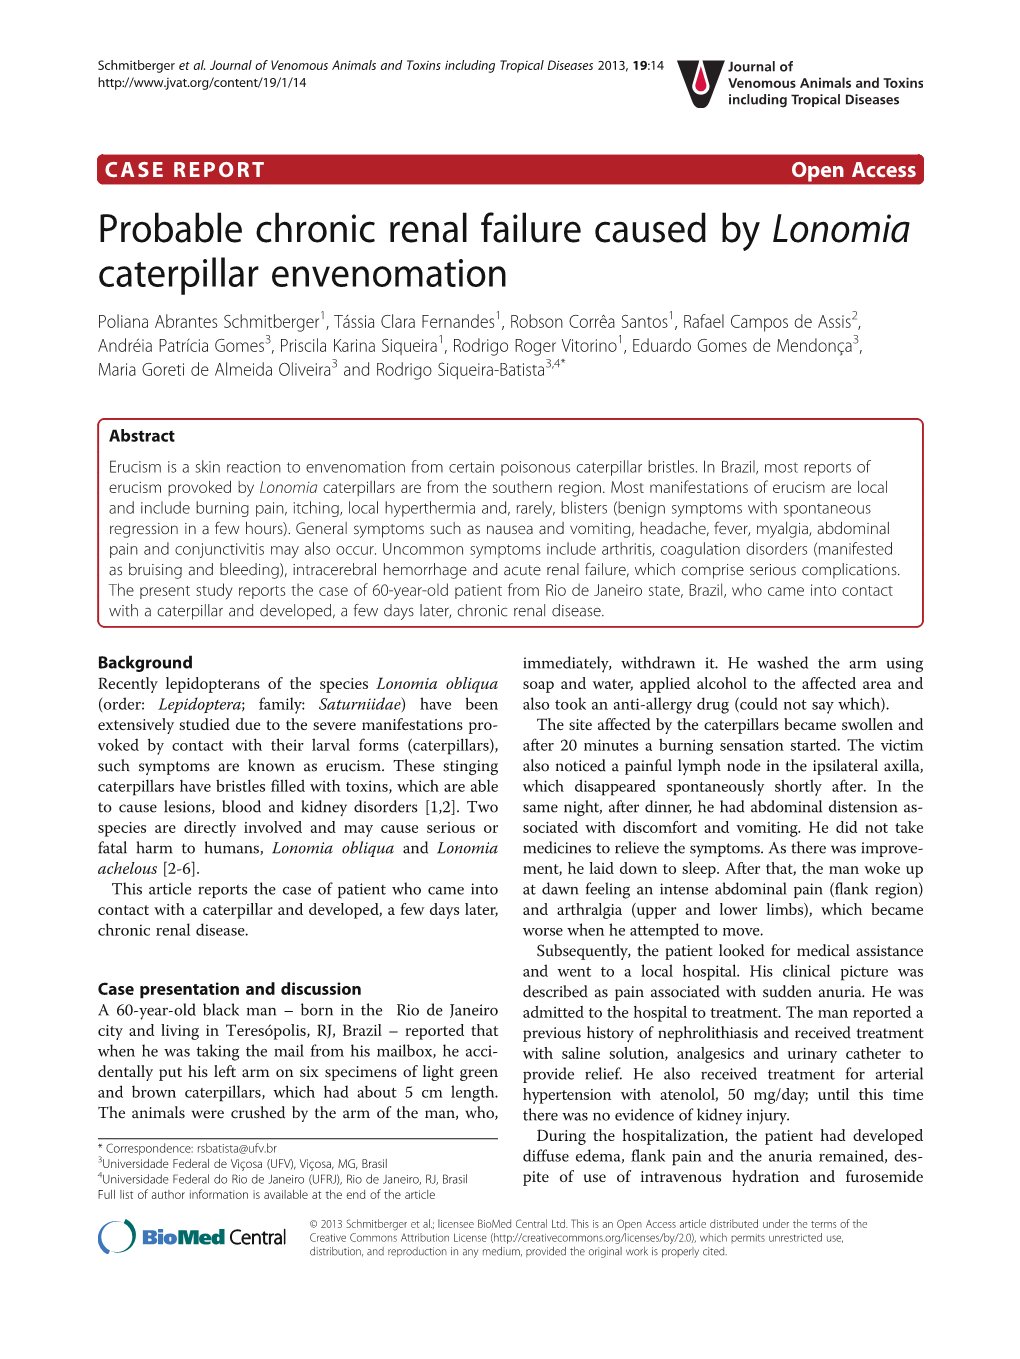 Probable Chronic Renal Failure Caused by Lonomia Caterpillar Envenomation